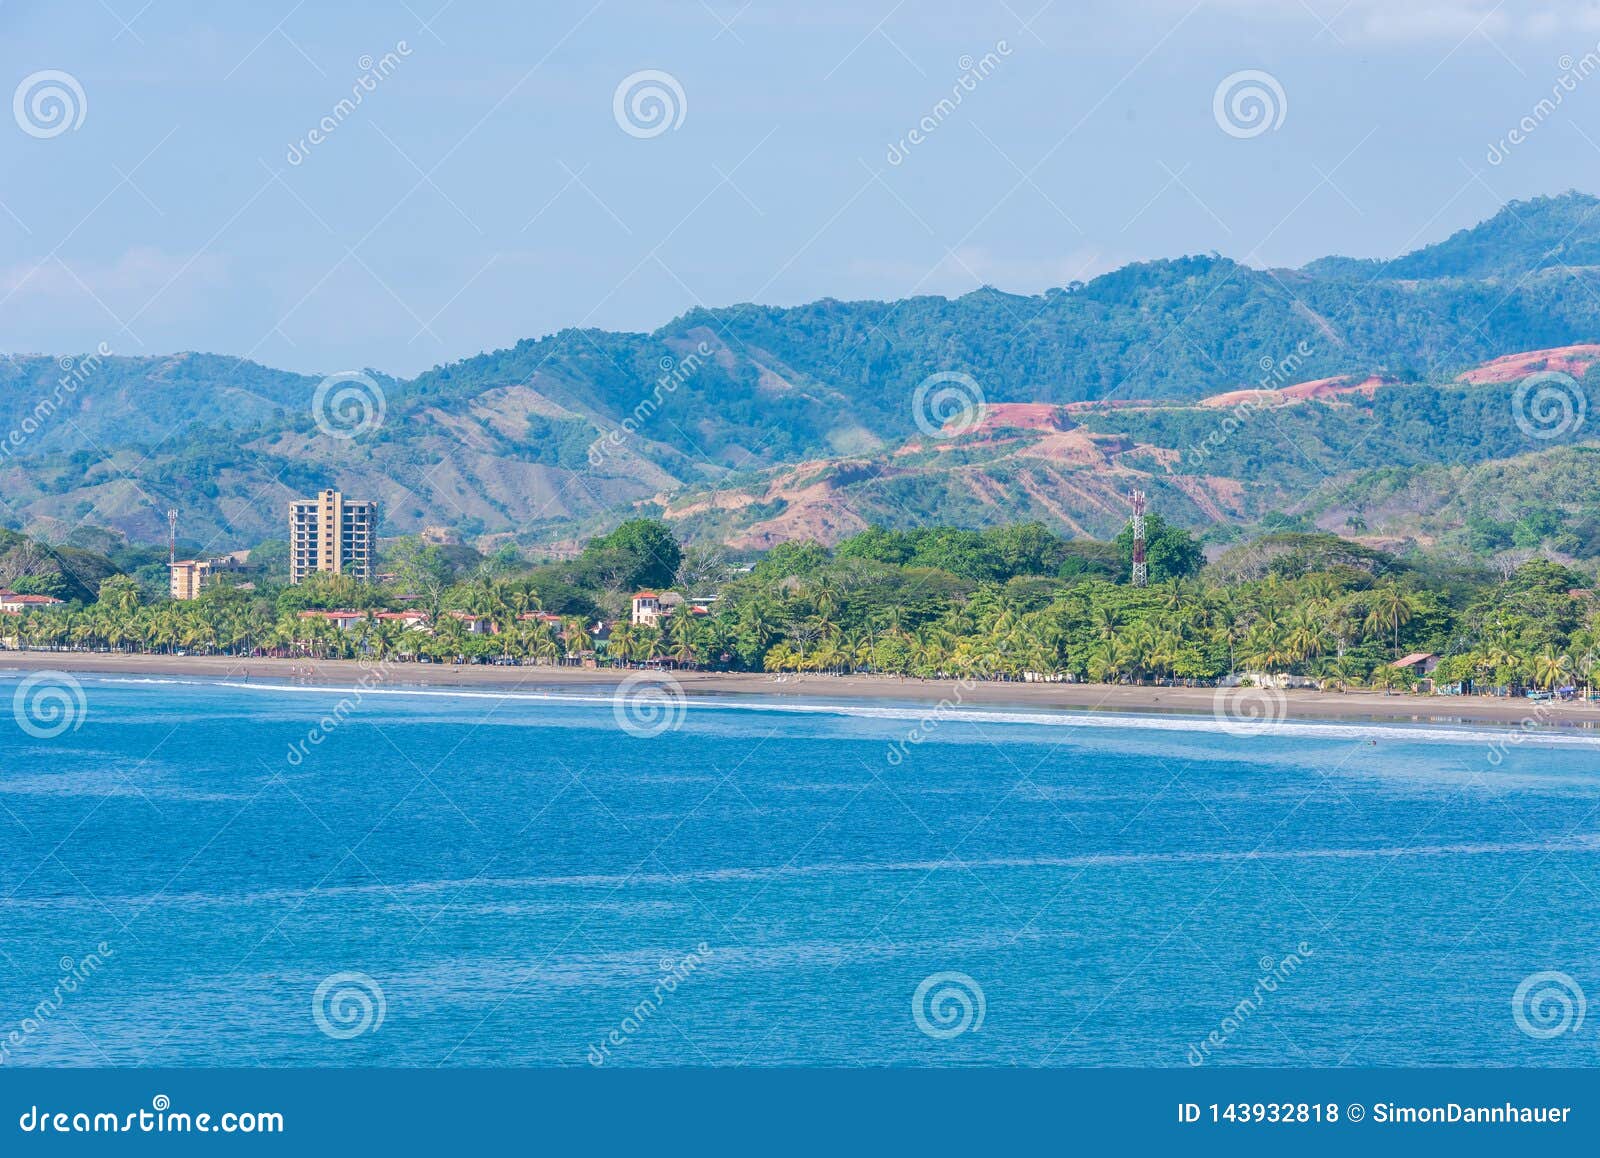 beach jaco - pacific coast of costa rica